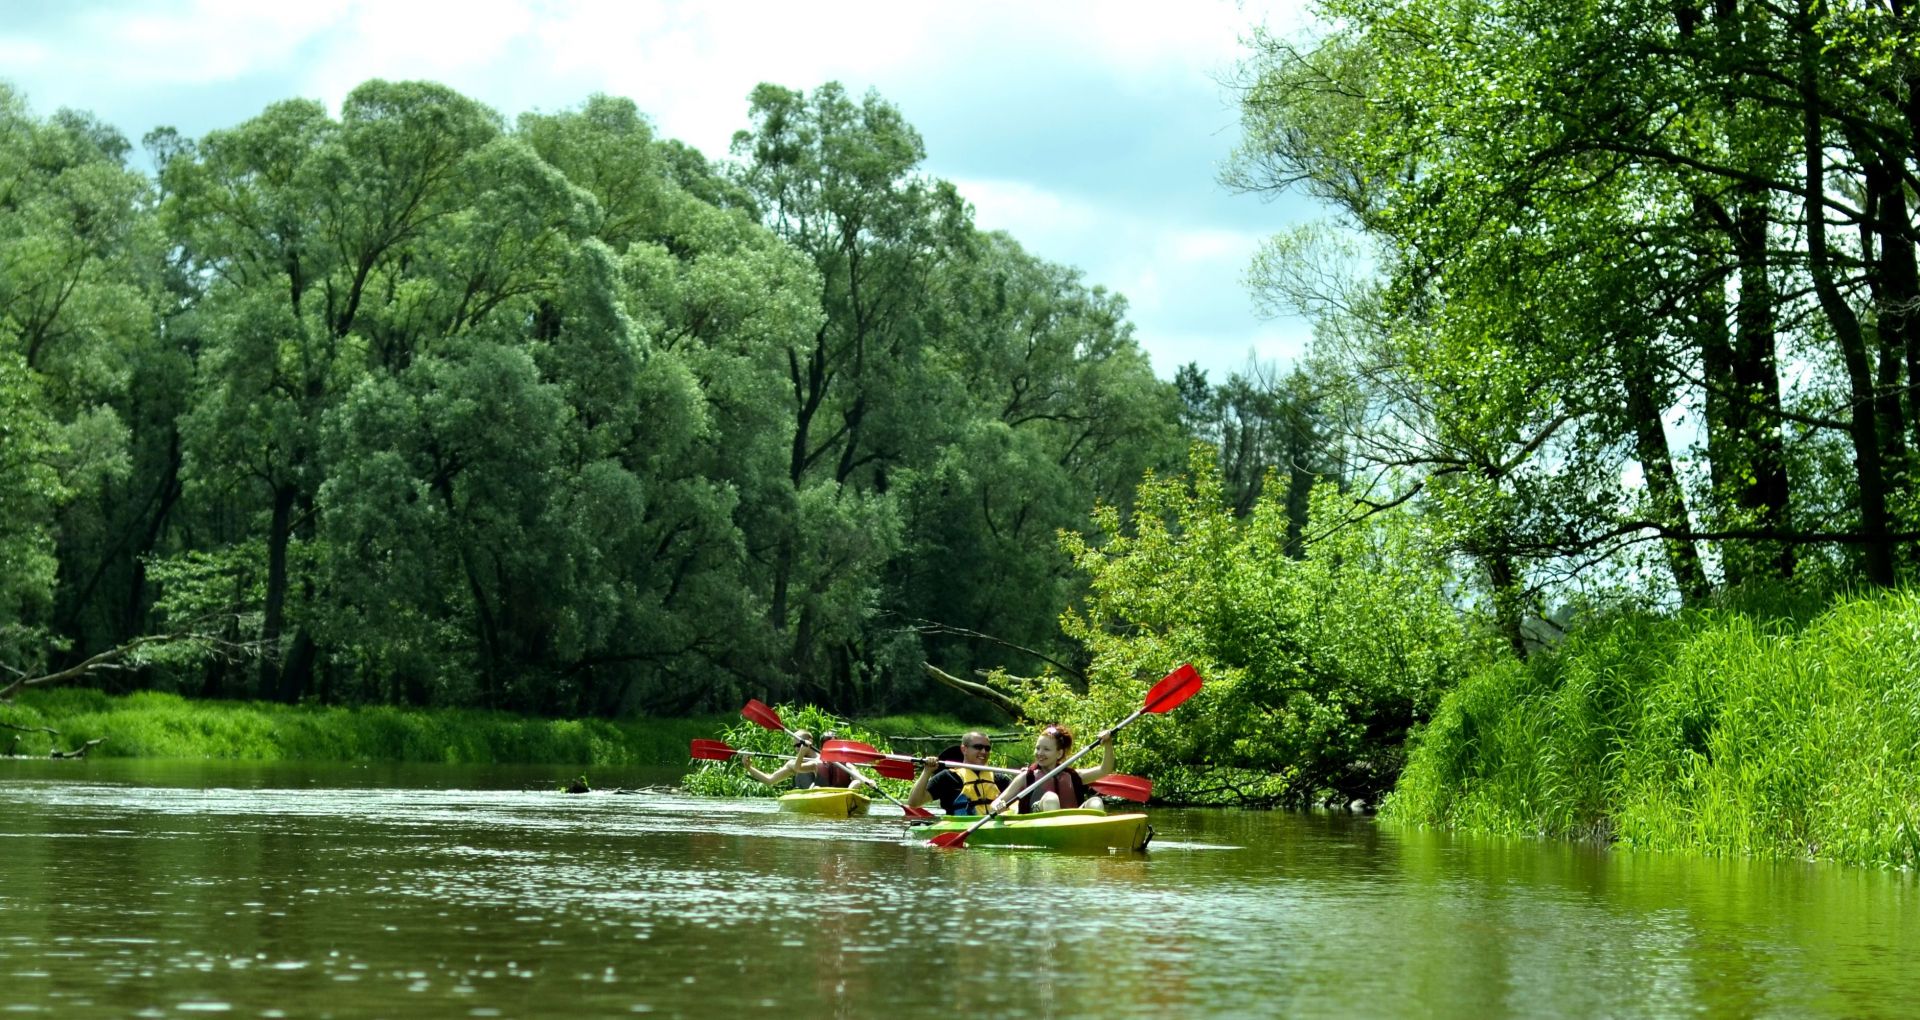 Canoeing on the Bug and Włodawka